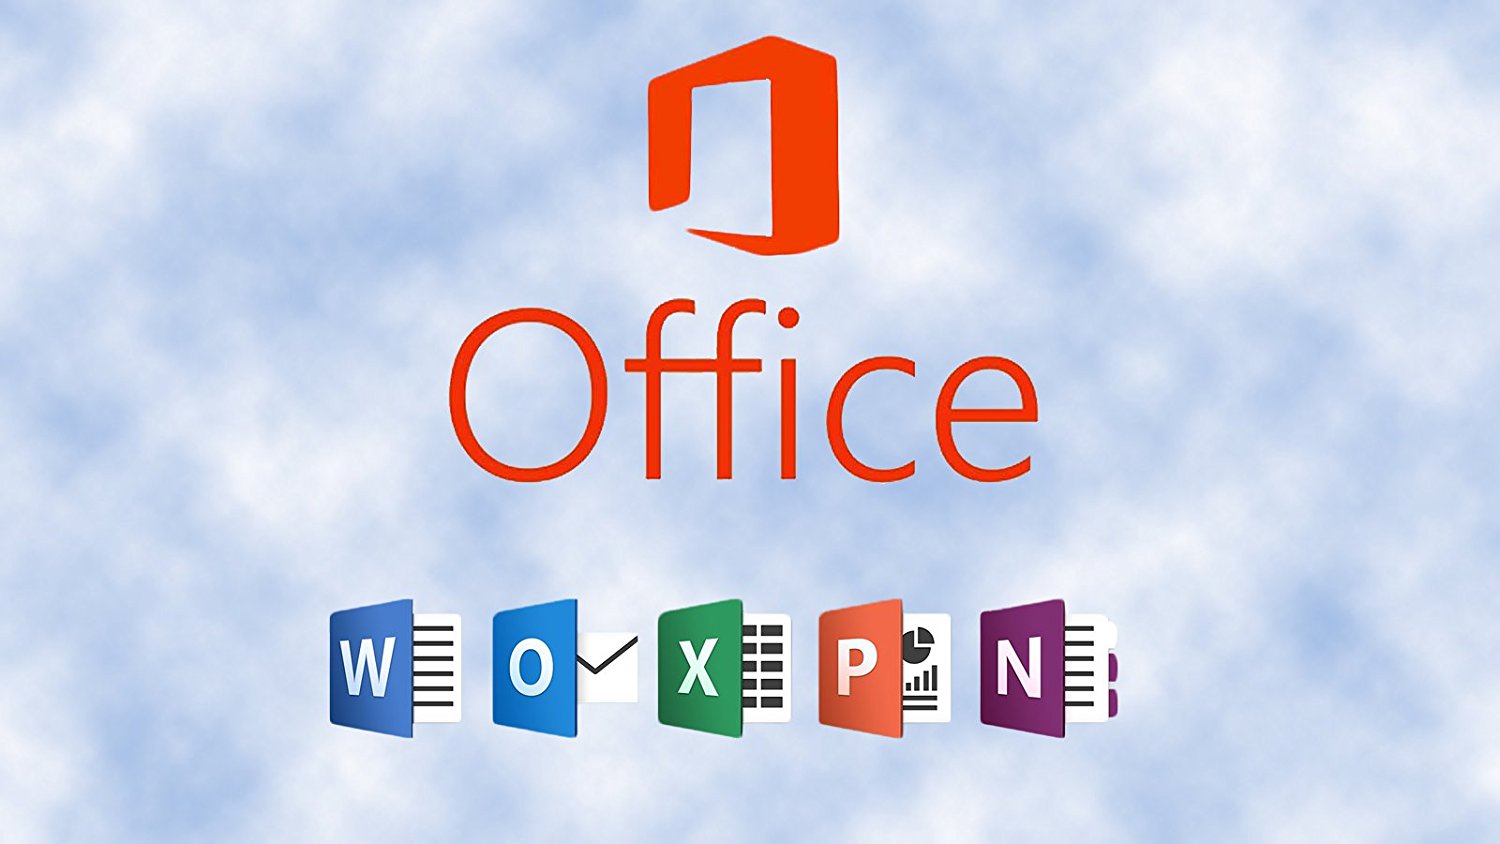 Microsoft Office Wallpaper 01 - [1500x844]